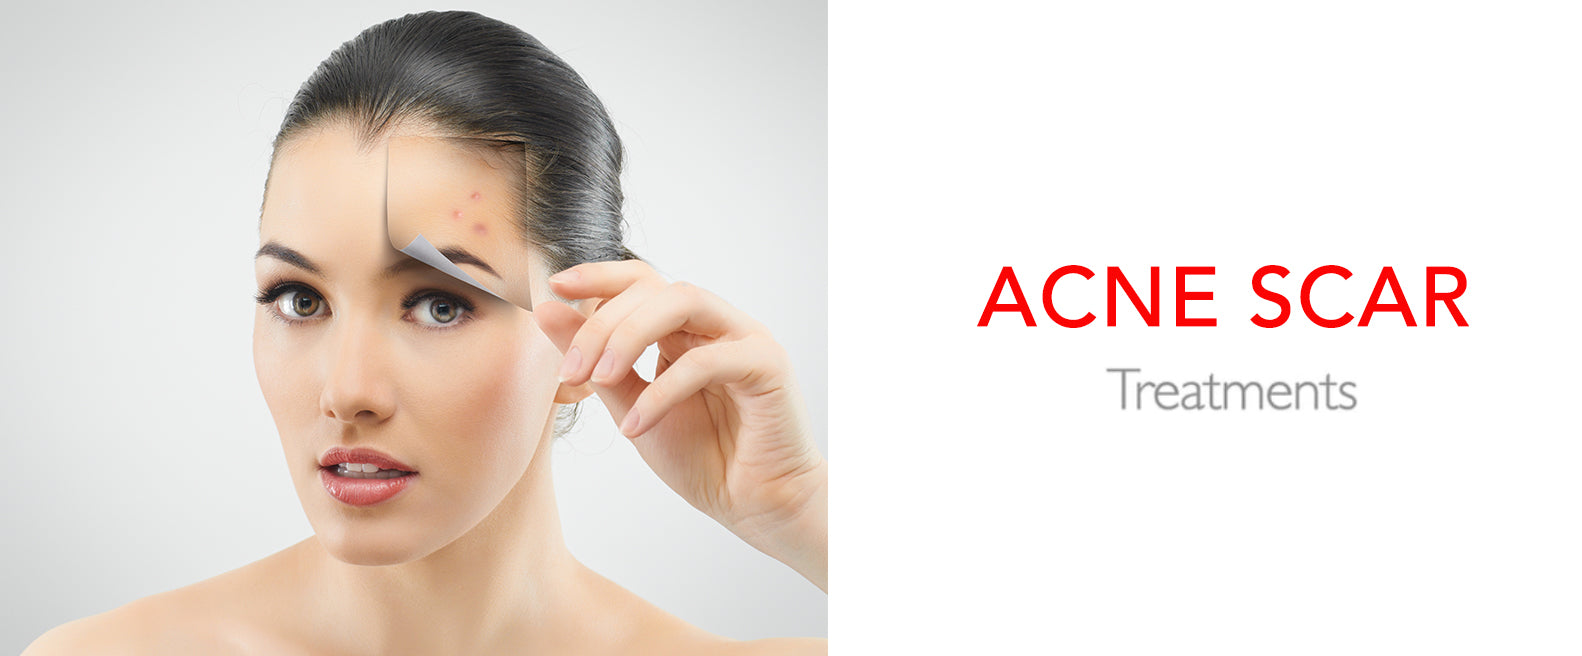 Acne scar treatments